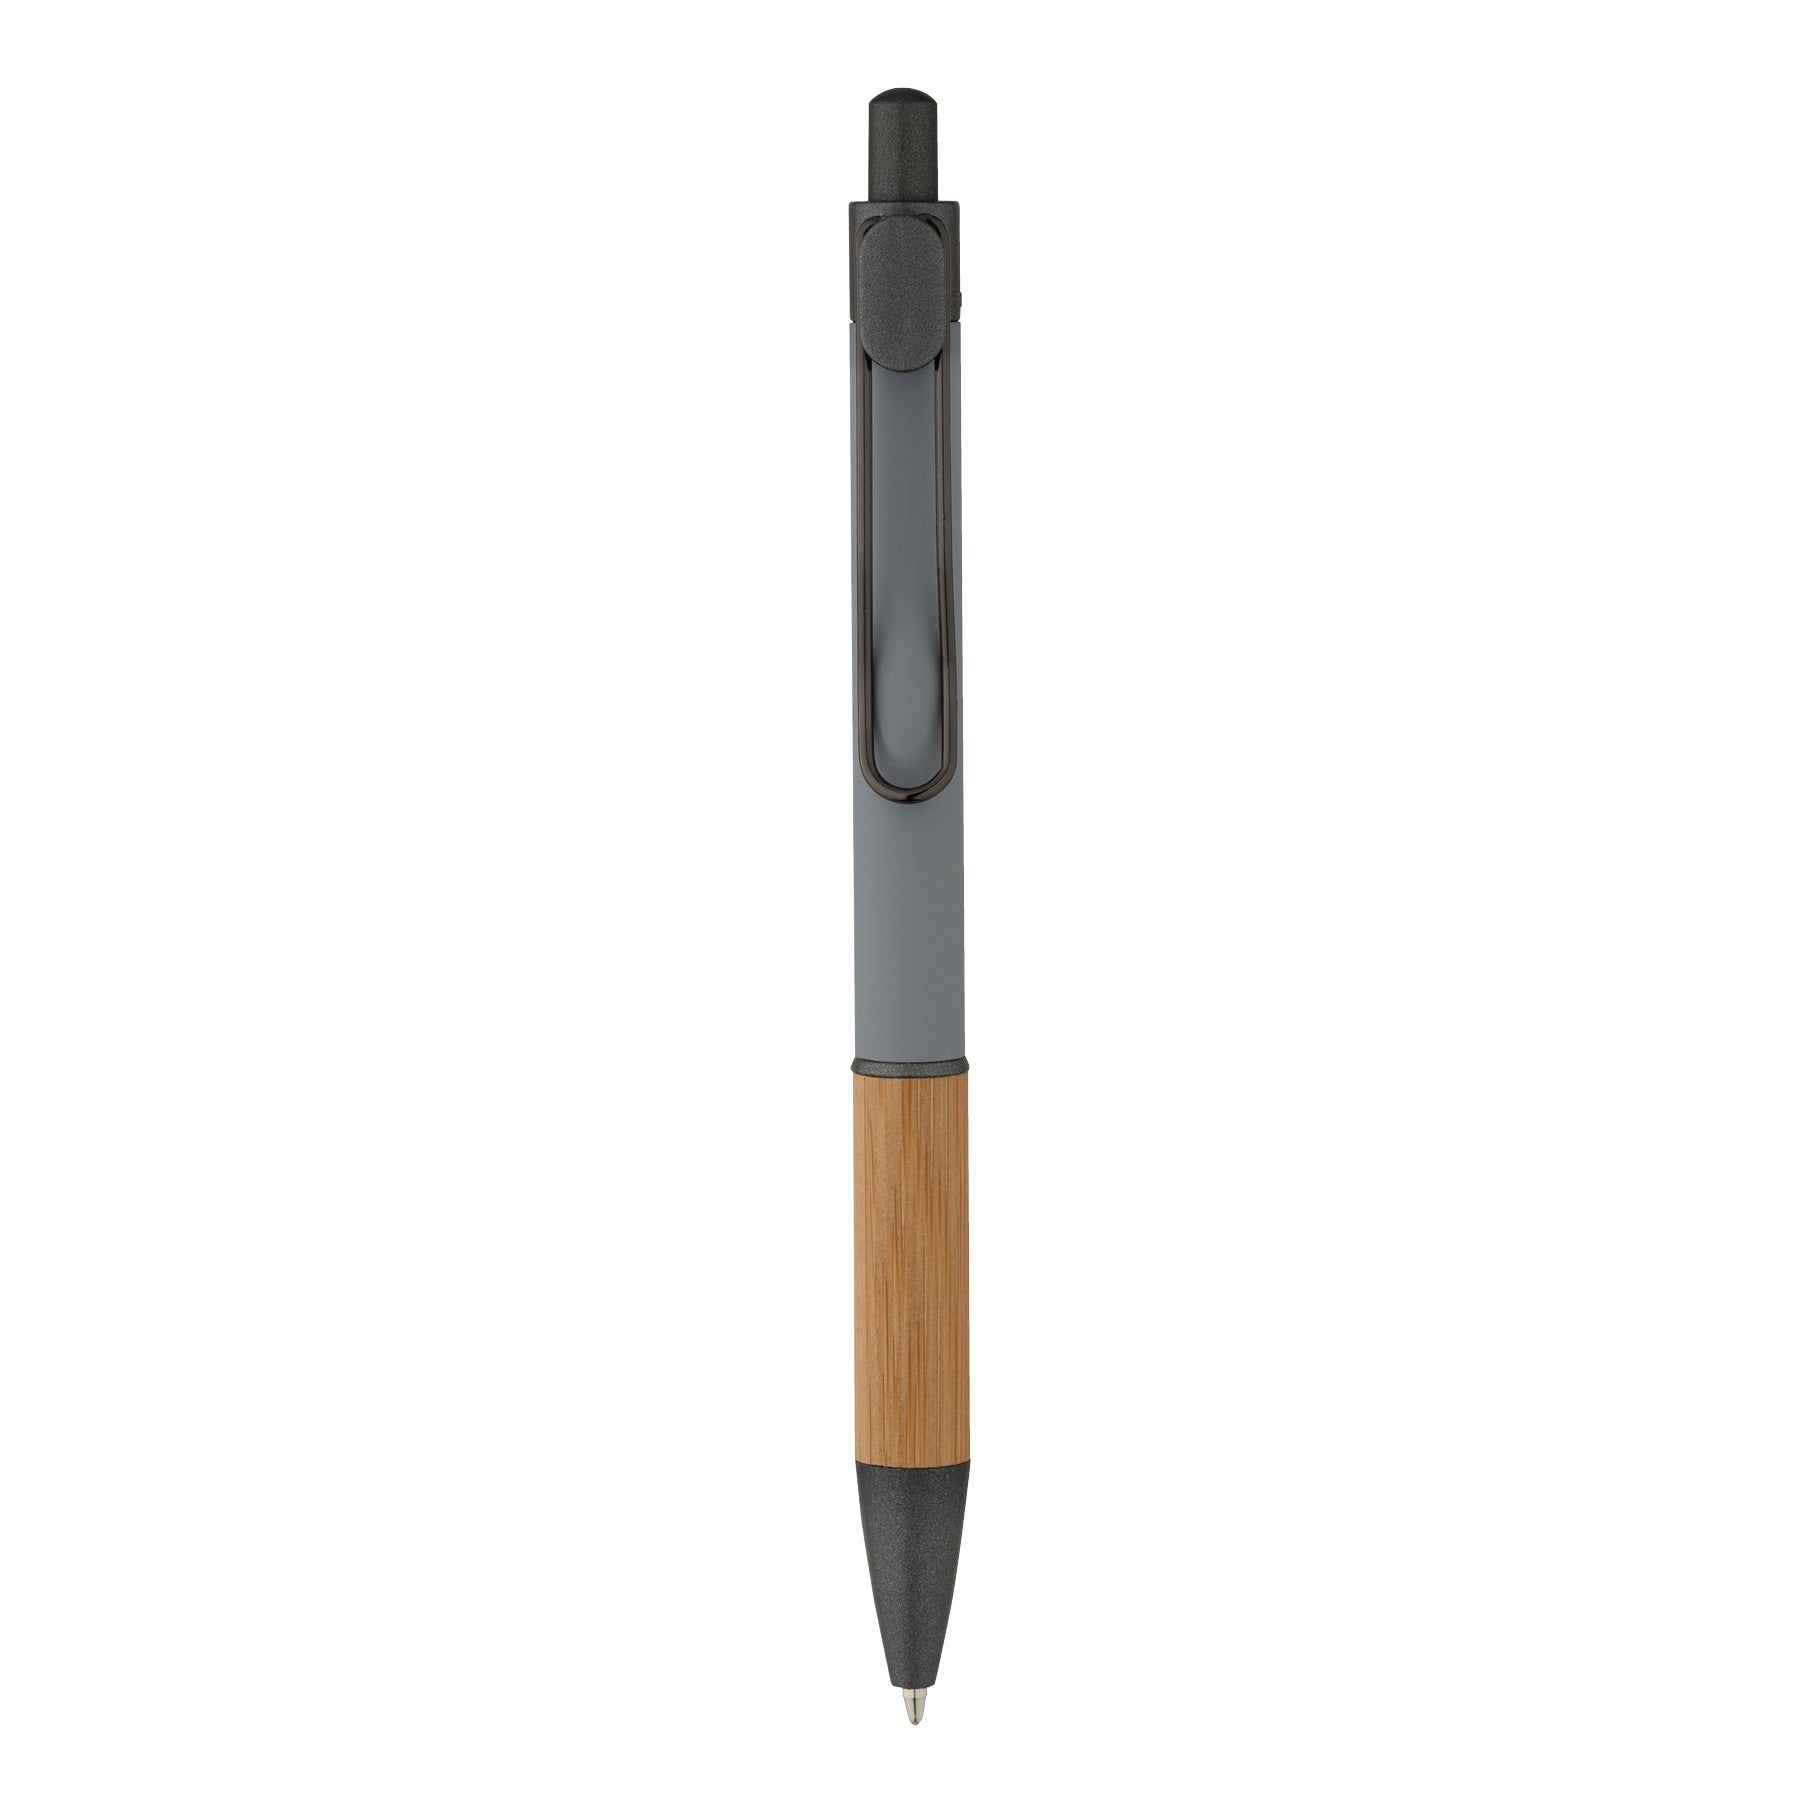 Customized manoa ballpoint bamboo pen in gray.